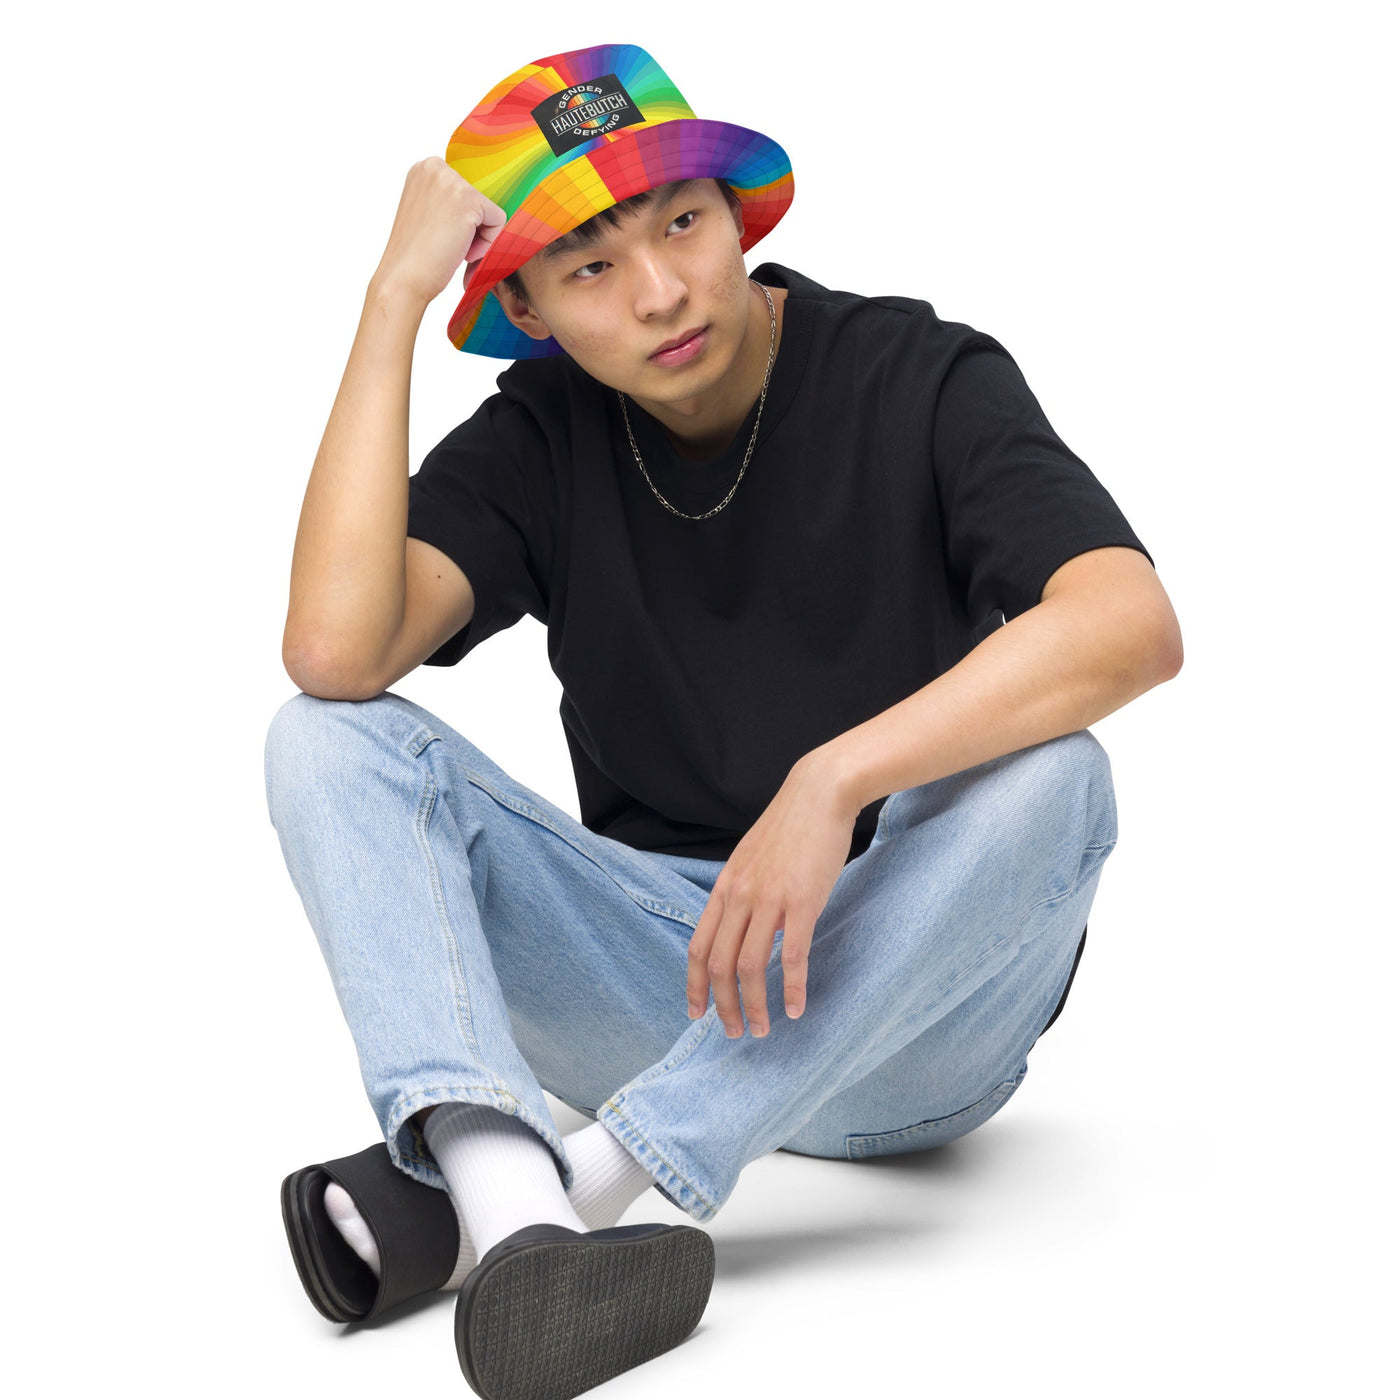 HauteButch Rainbow Bucket Hat - HAUTEBUTCH